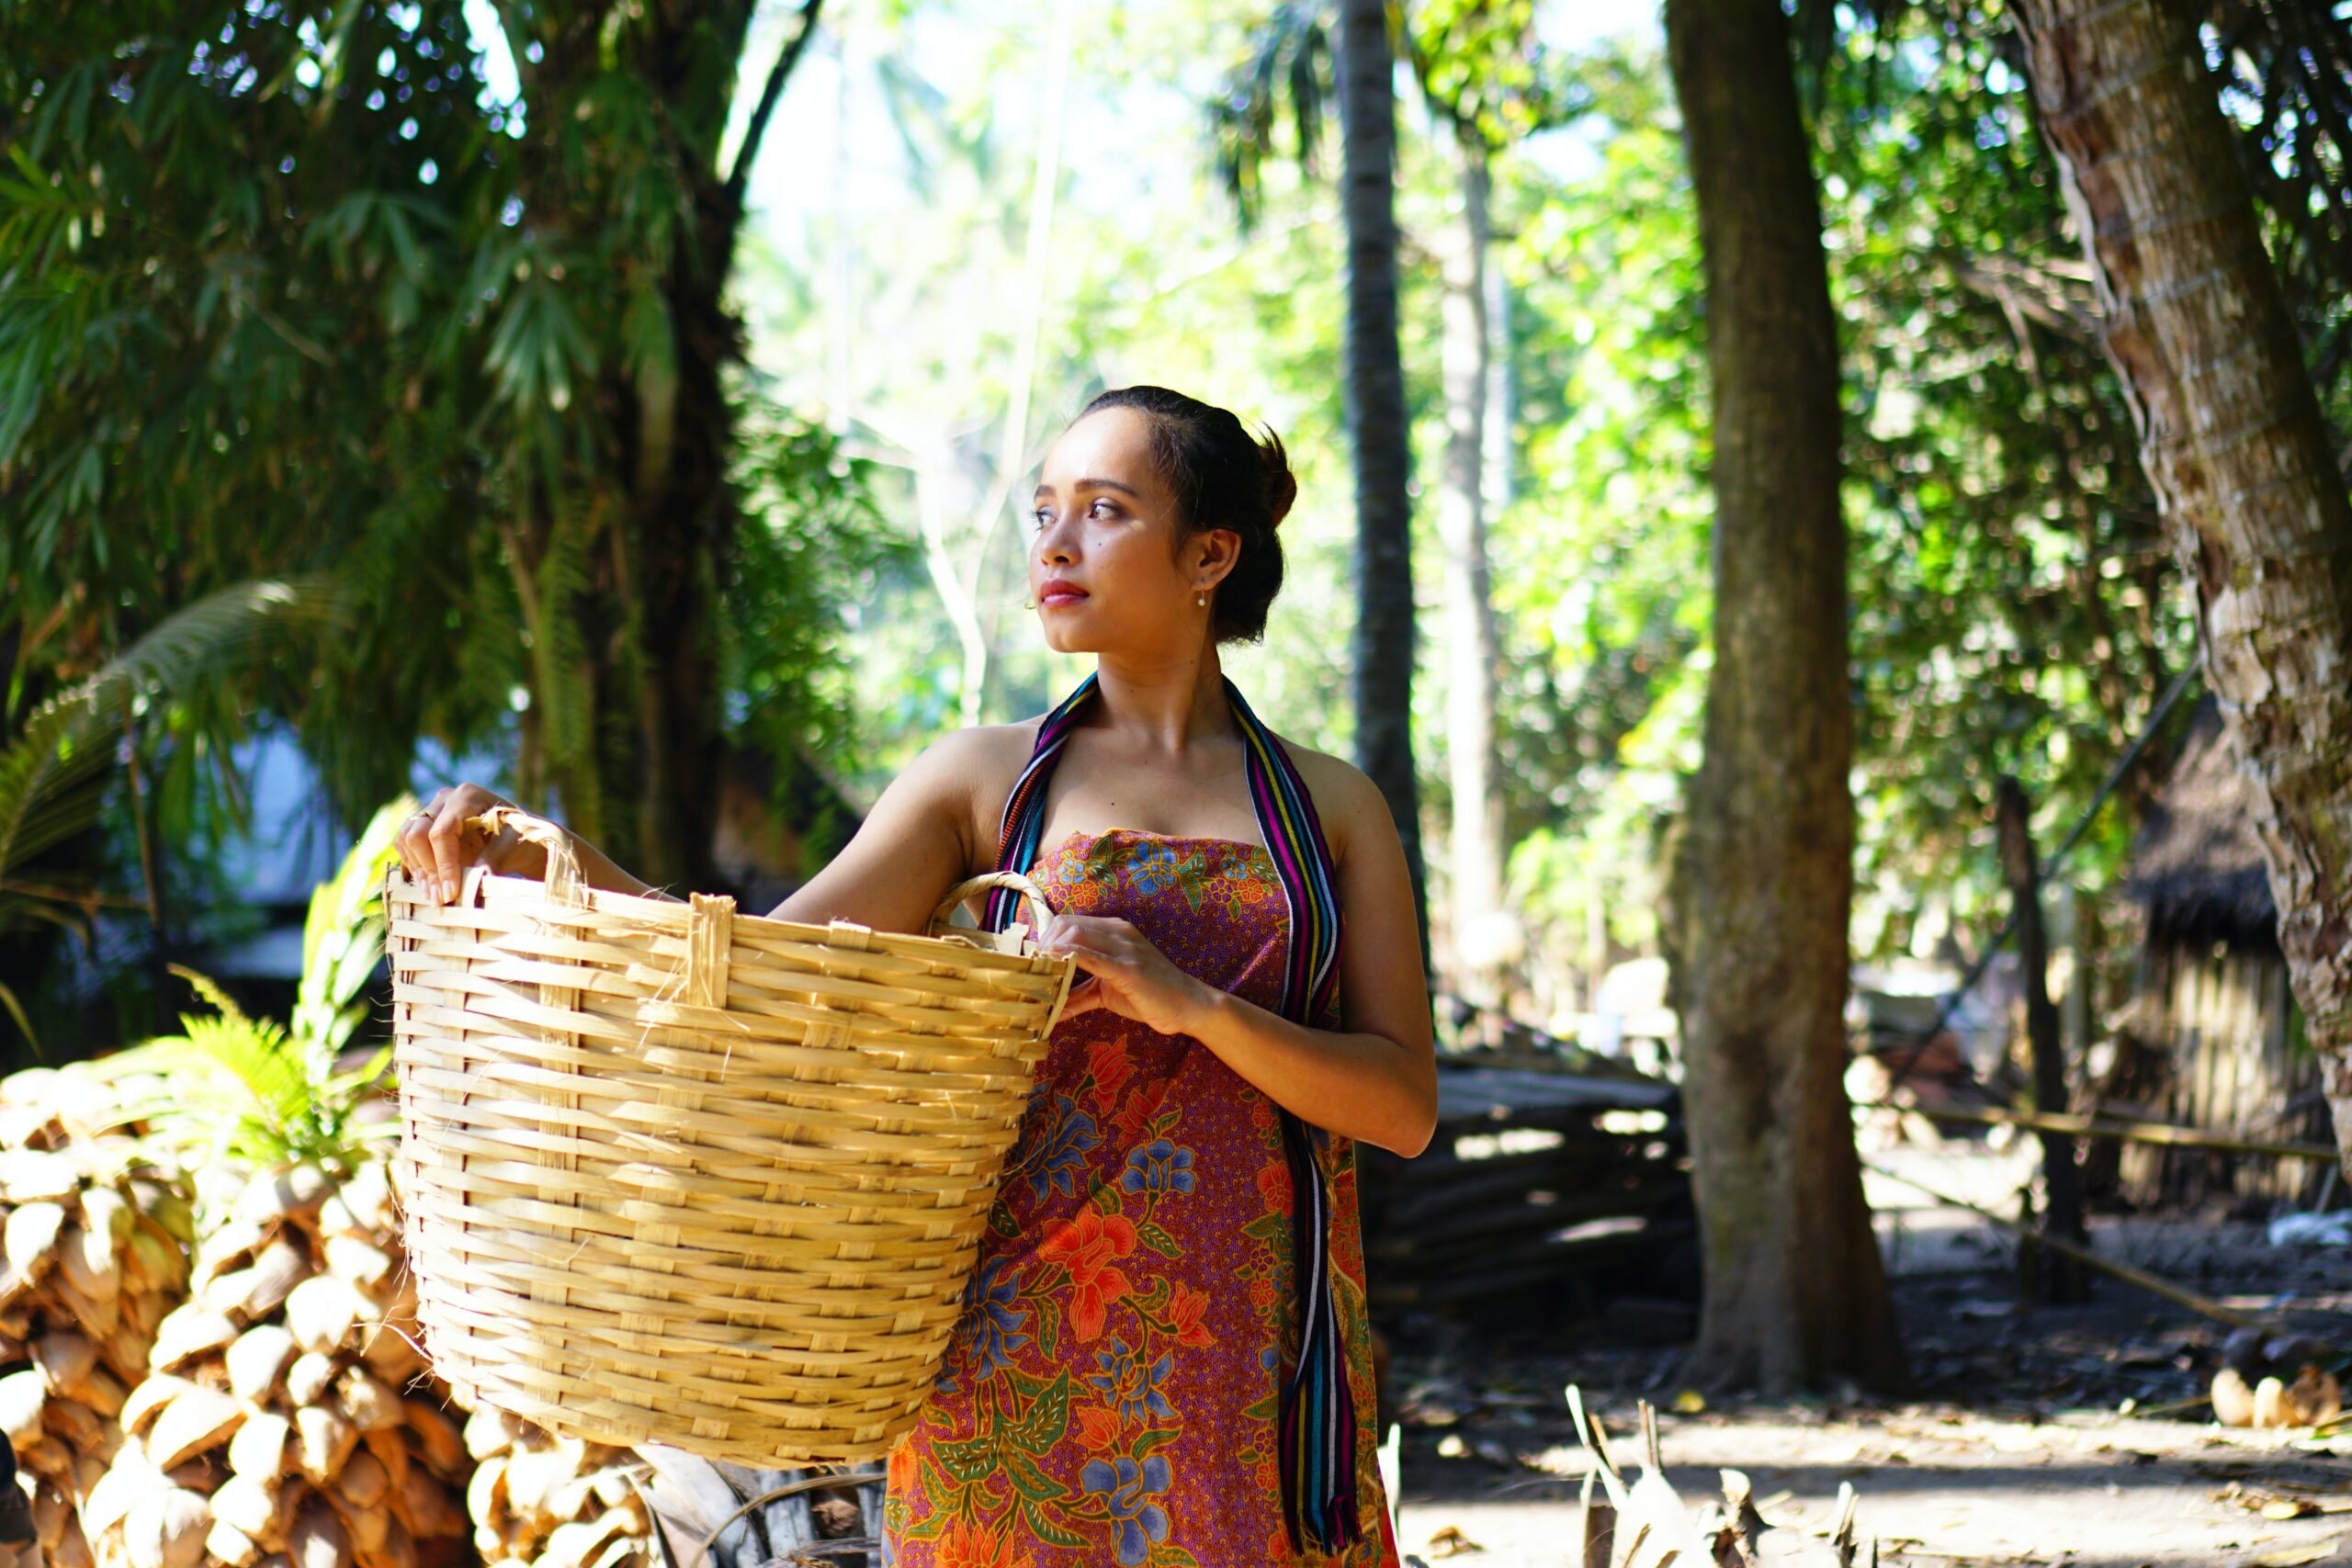 Sasak people in Lombok, Indonesia